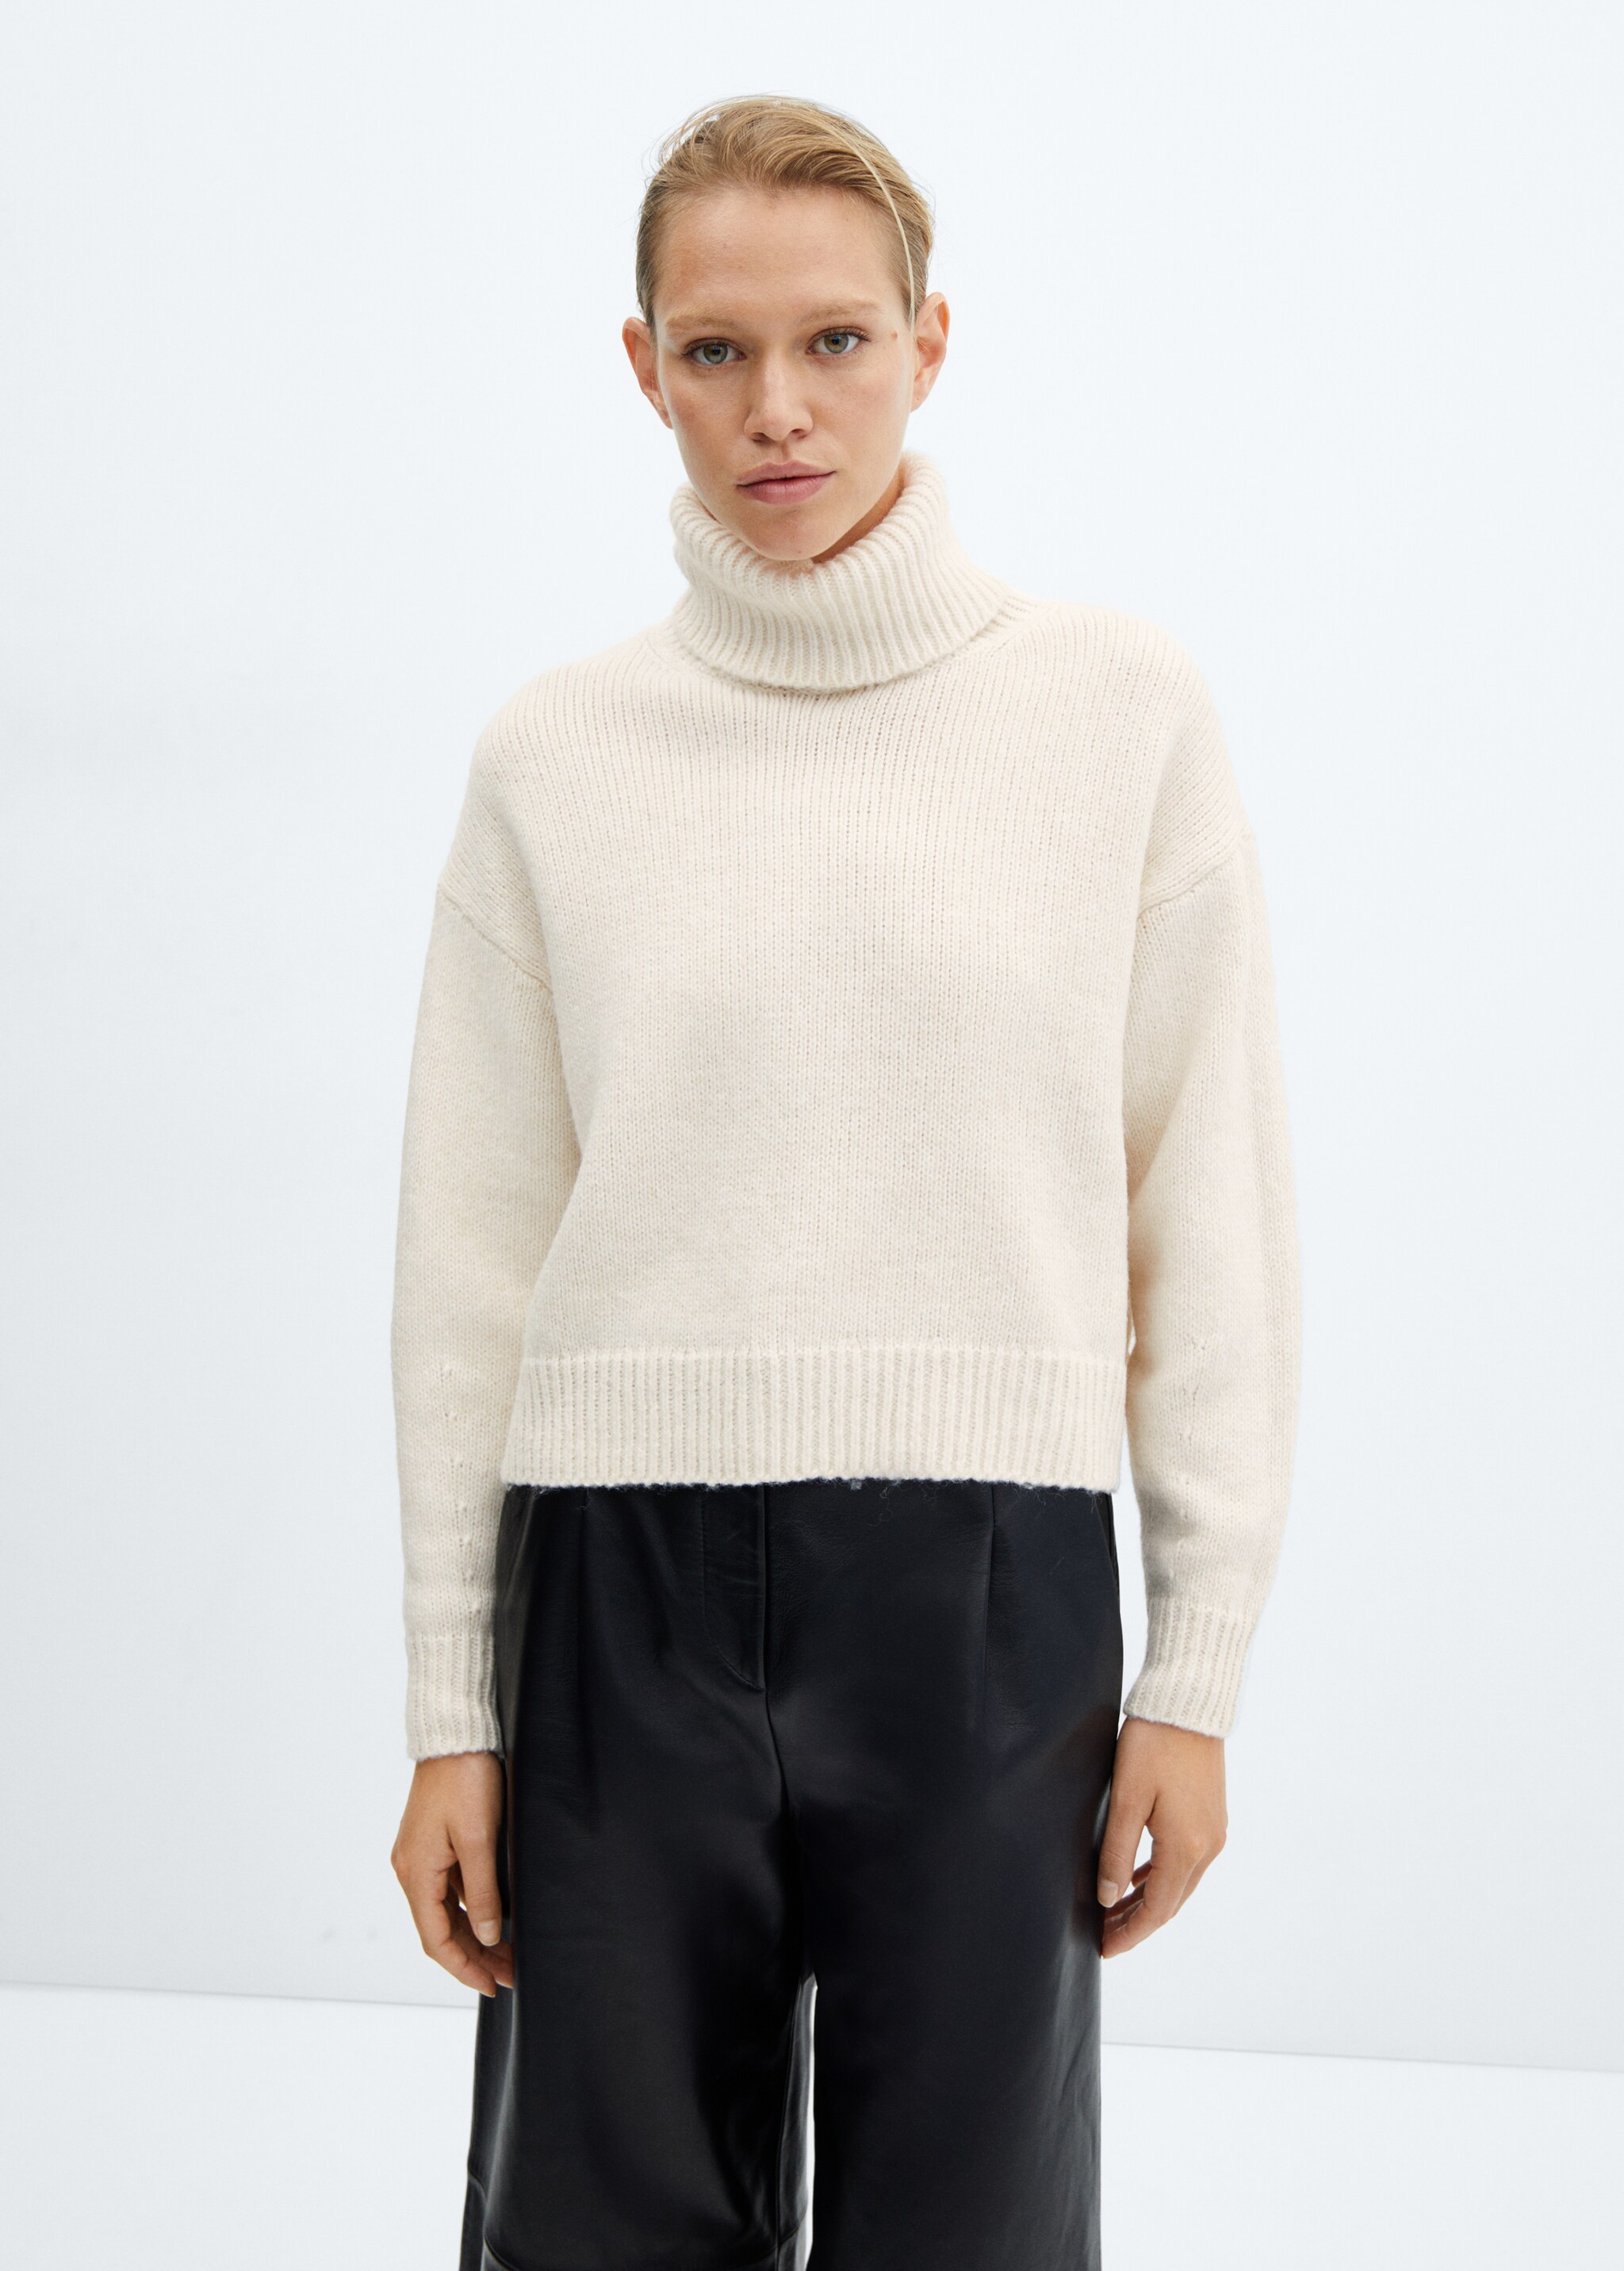 Turtleneck knitted sweater - Middenvlak